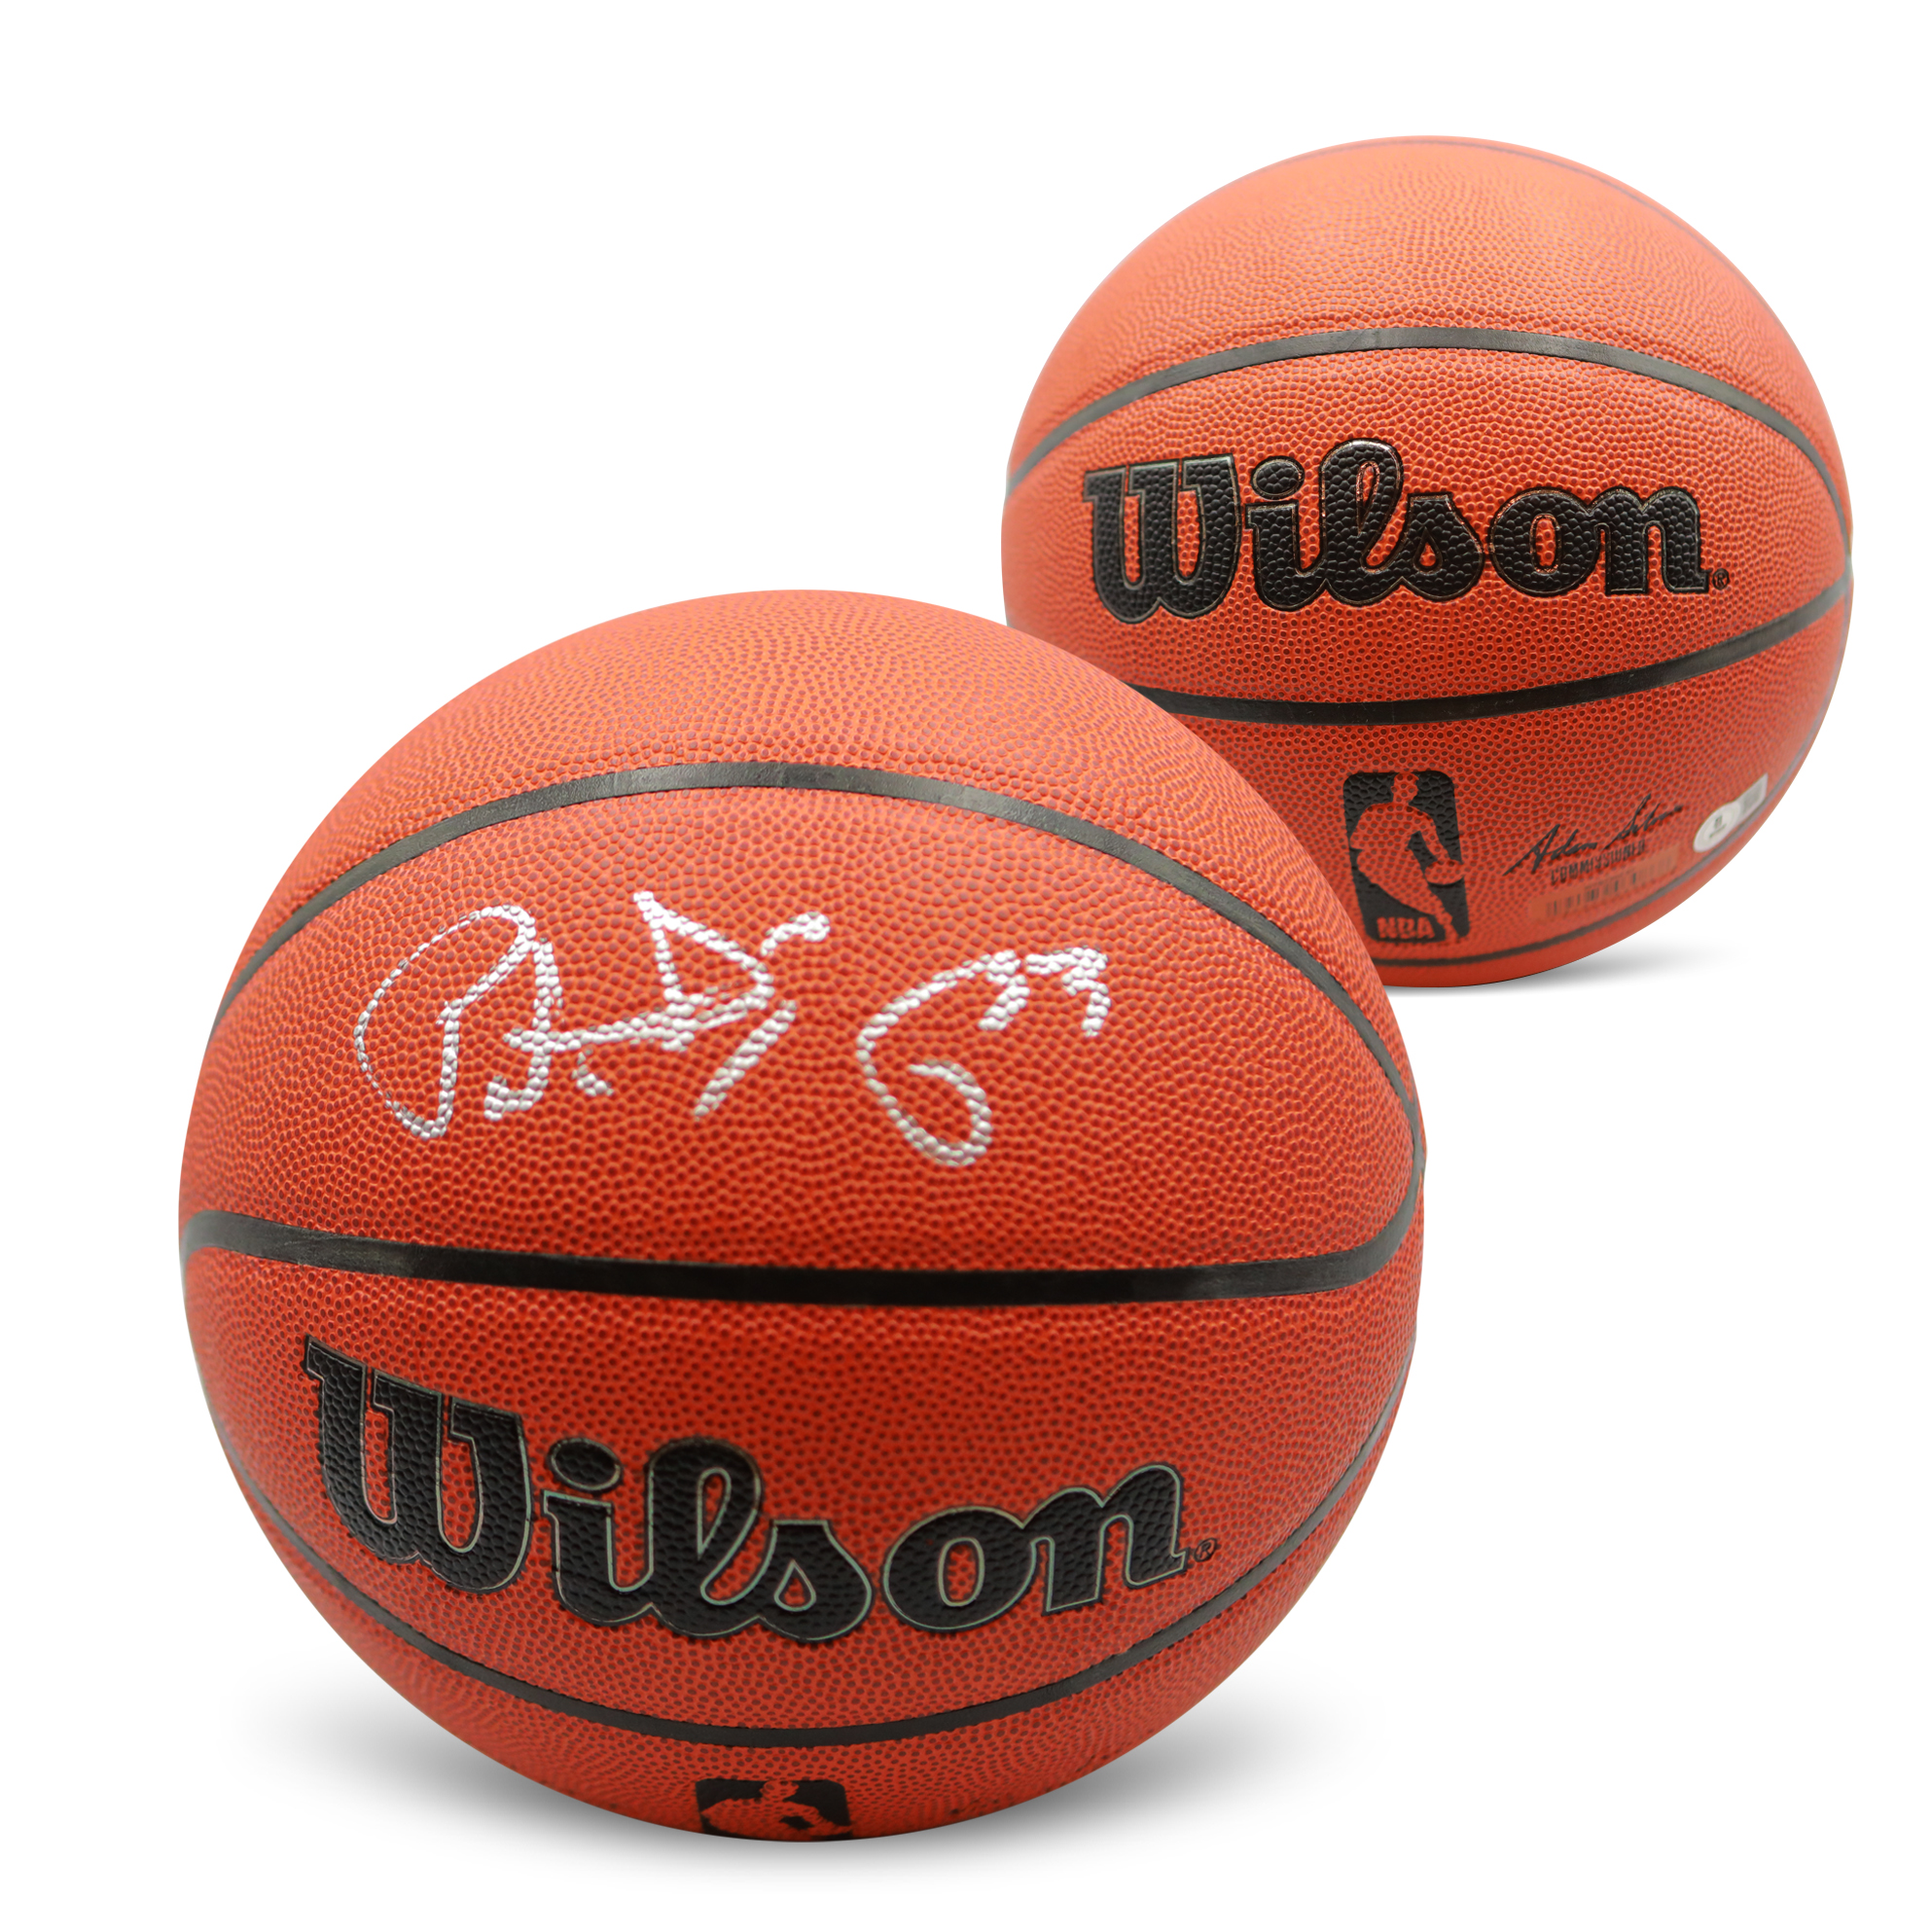 Patrick Ewing Autographed NBA Signed Full Size Replica Basketball Beckett COA